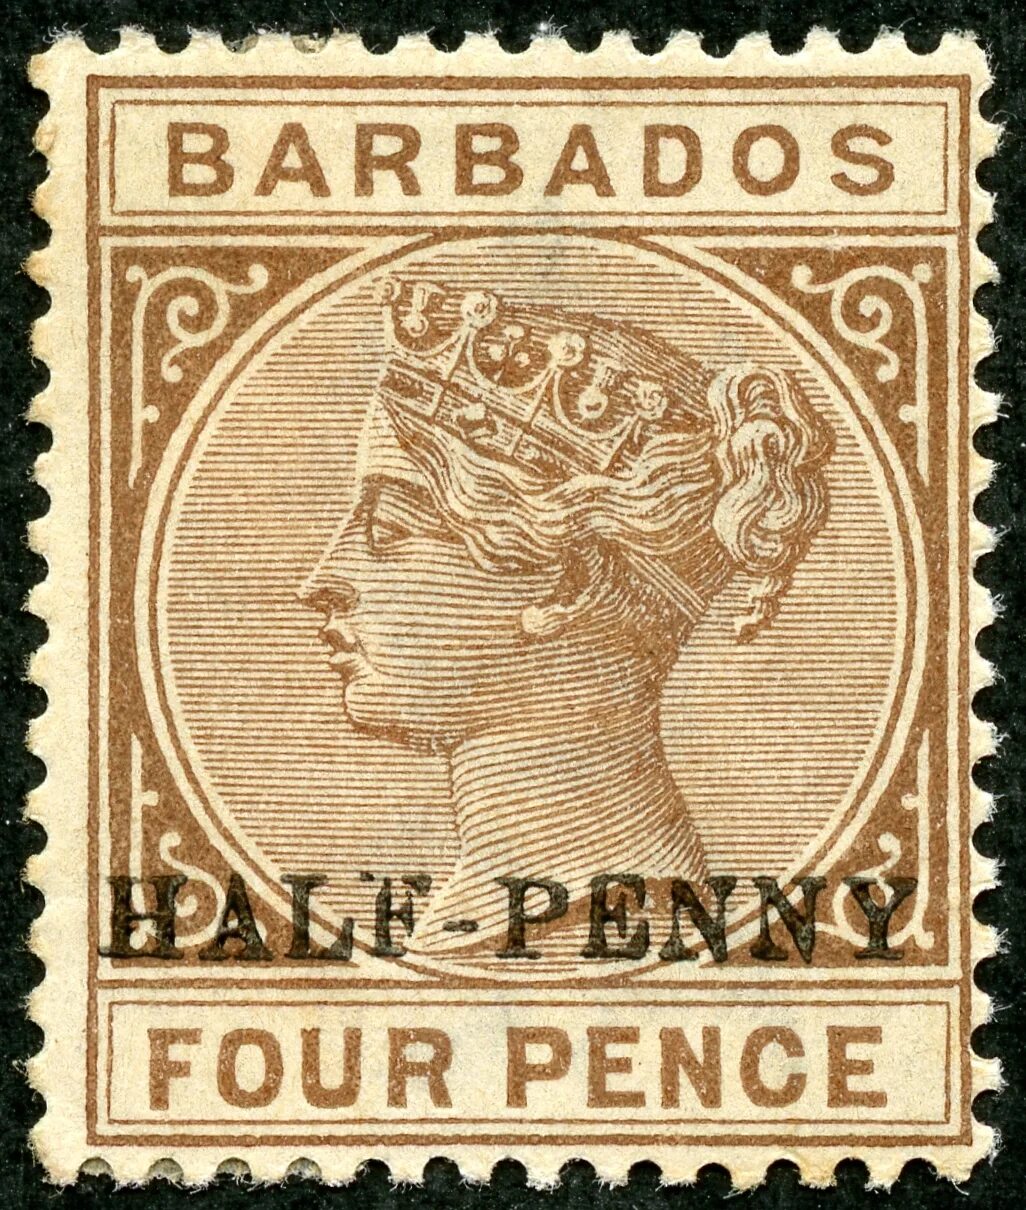 Марка Гватемала и Барбадоса. Барбадос марка. Барбадос марка Почтовая. Марка с изображением Барбадос. Дам гватемалу и два барбадоса